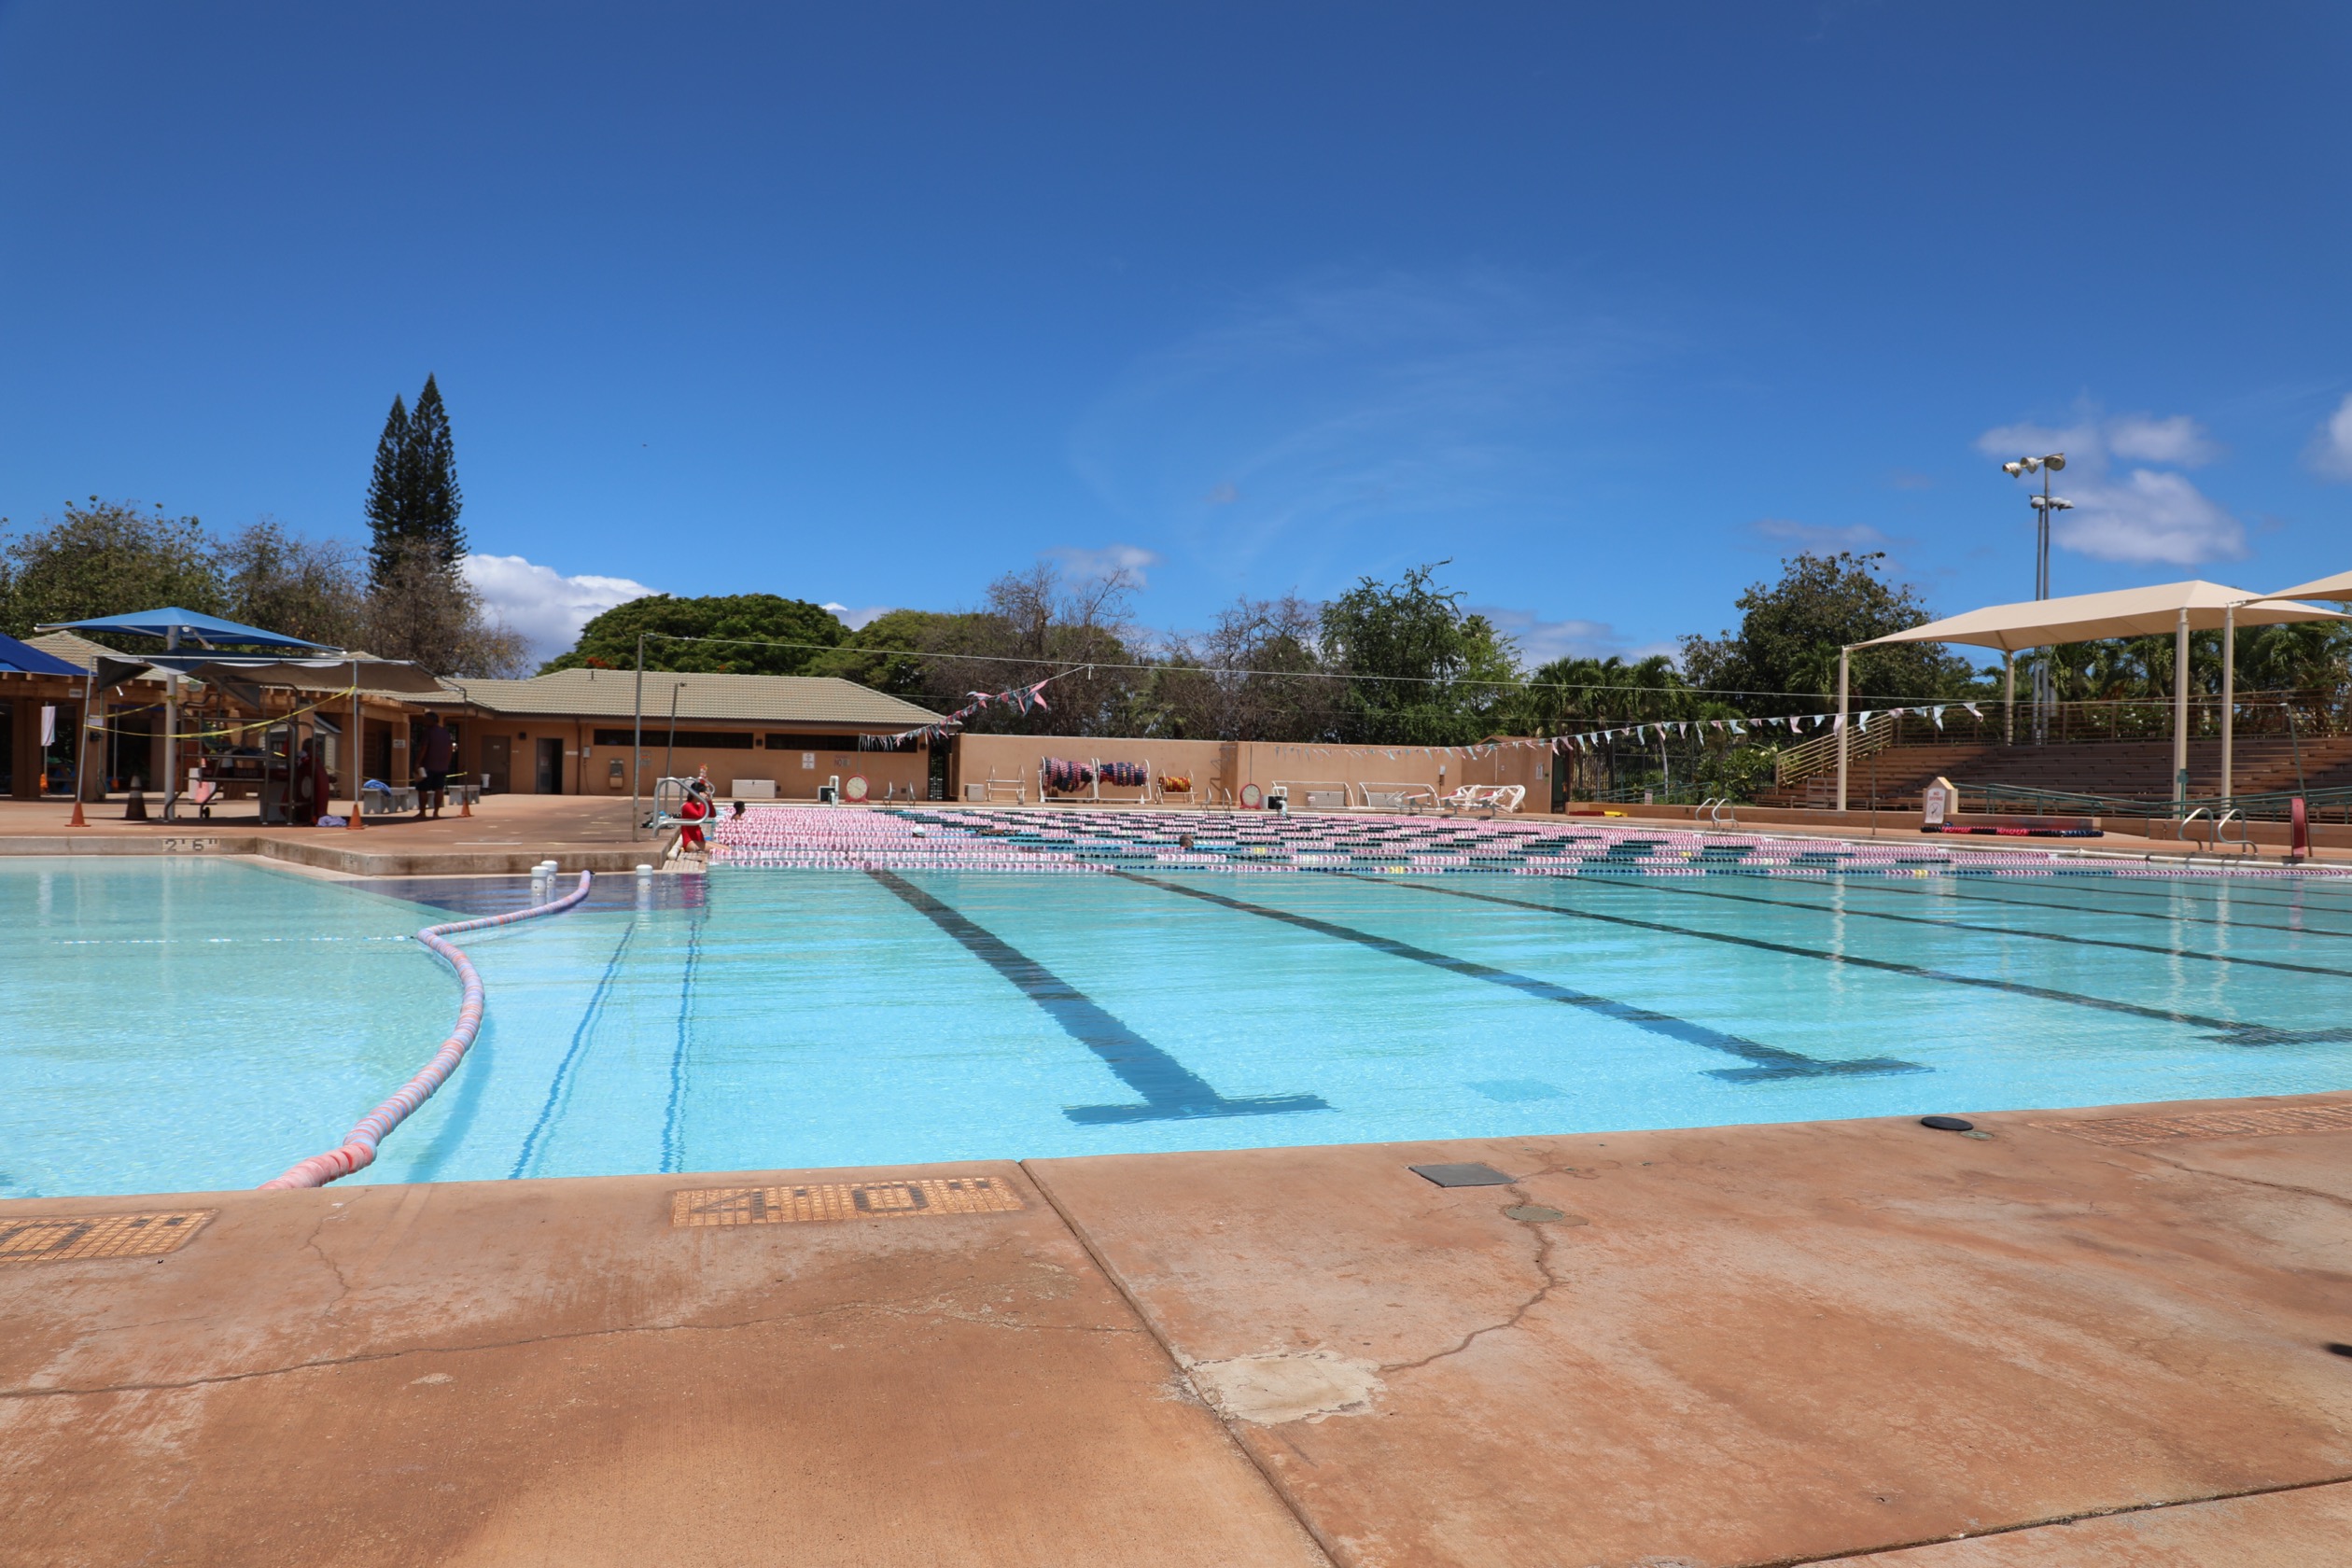 Lahaina Aquatic Center: A Free Lap Swimming Pool in Maui